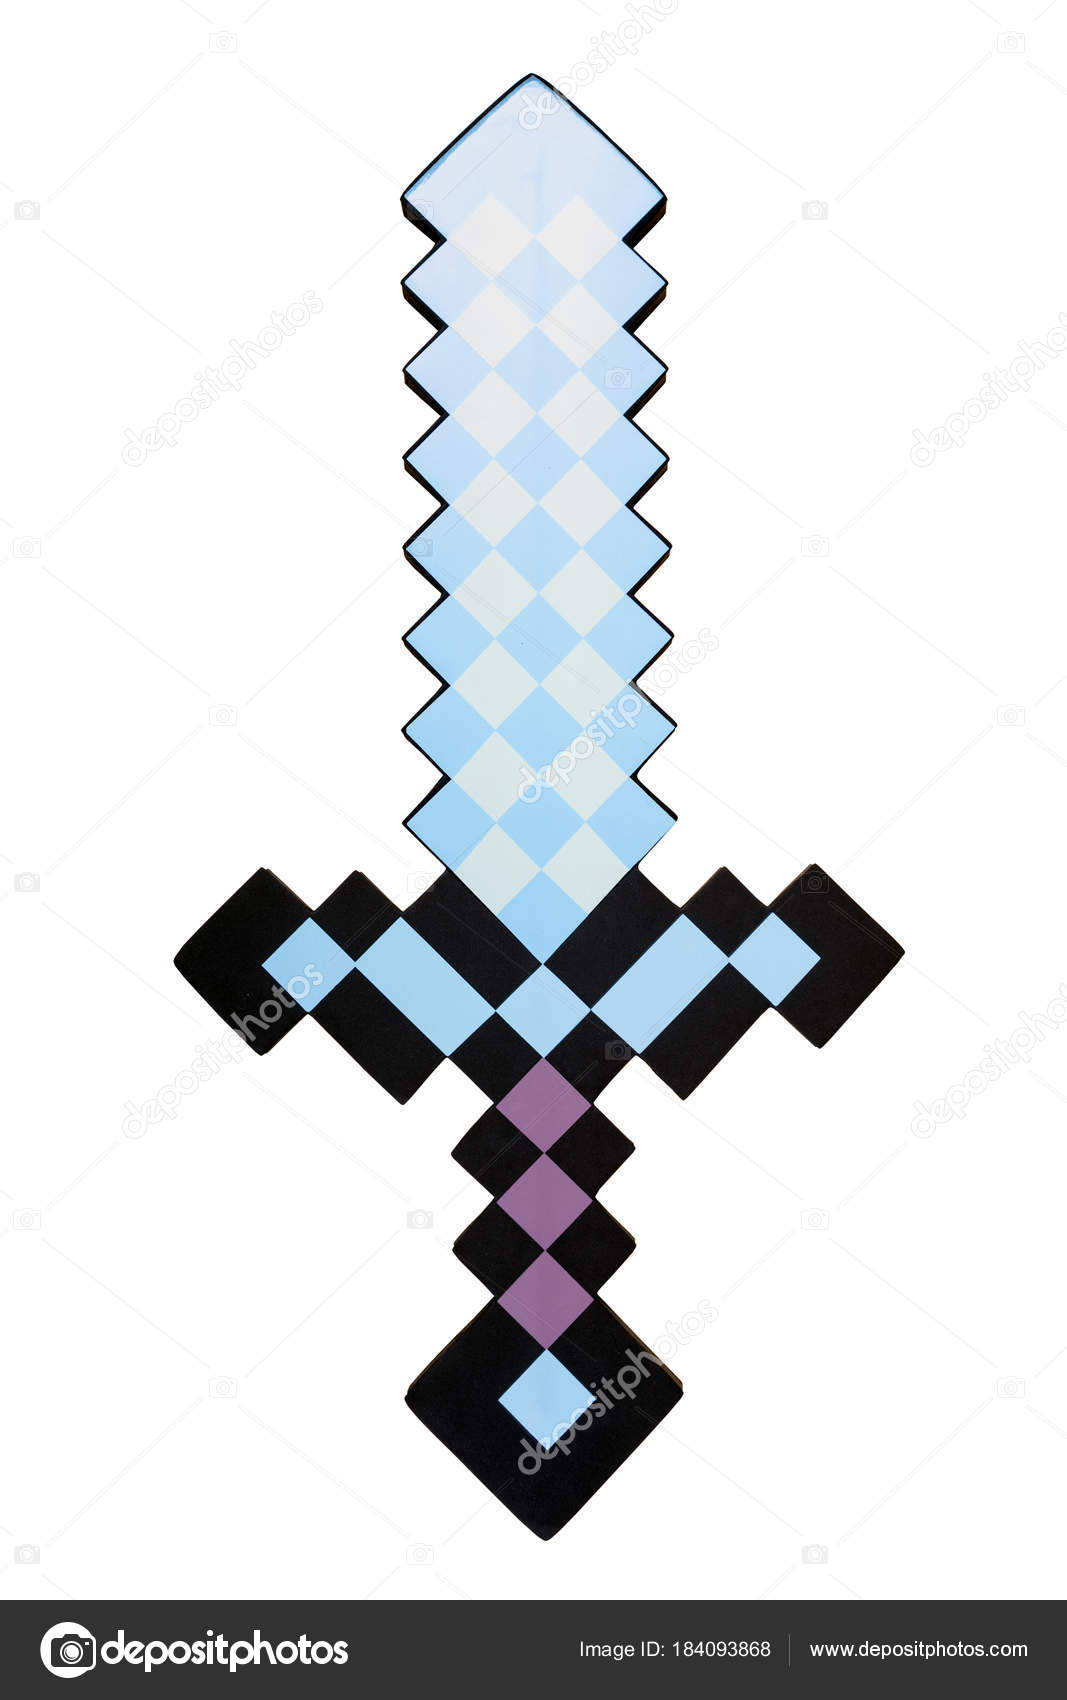 Download Diamond Sword Sword Minecraft Royalty-Free Stock